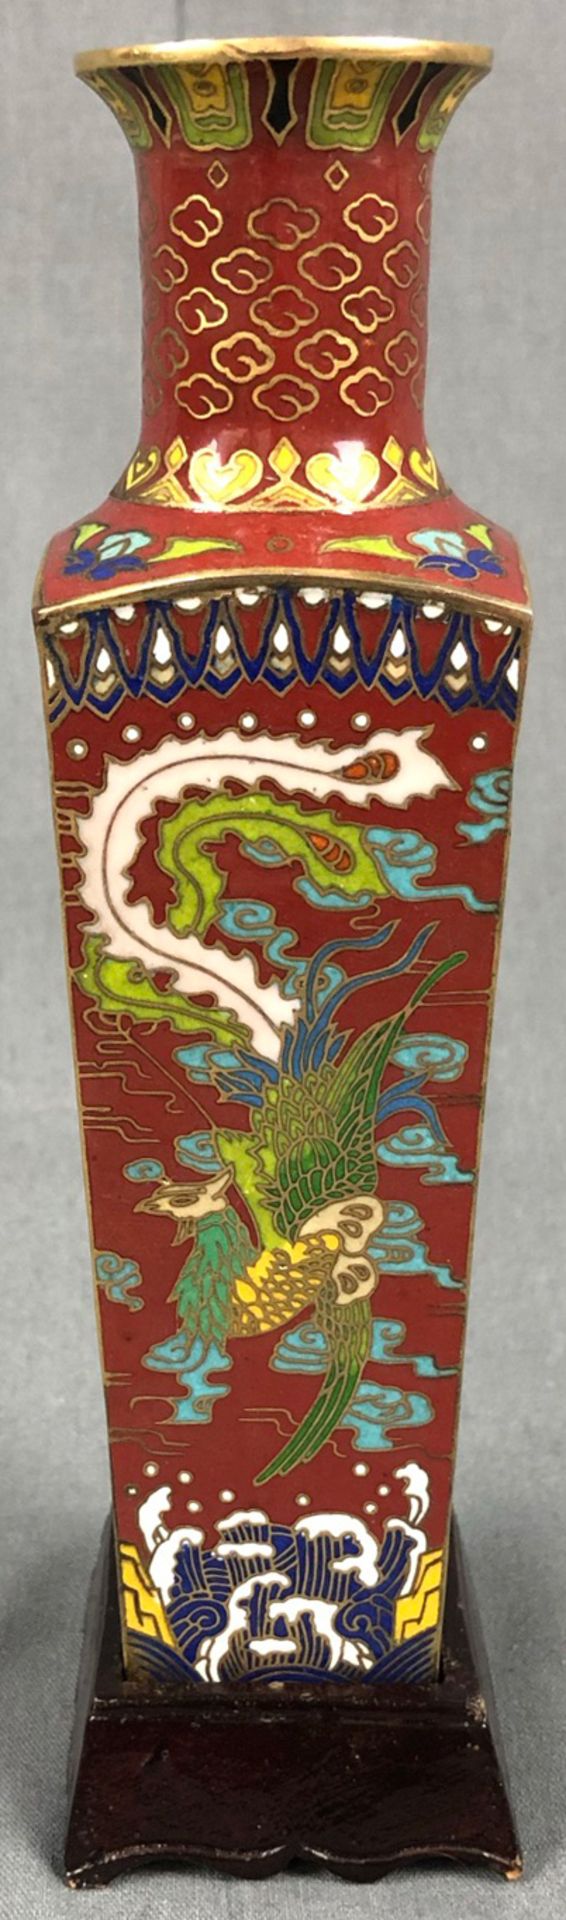 Cloisonne vase Japan / China. Simurgh over waves. 17 cm high. - Image 8 of 14